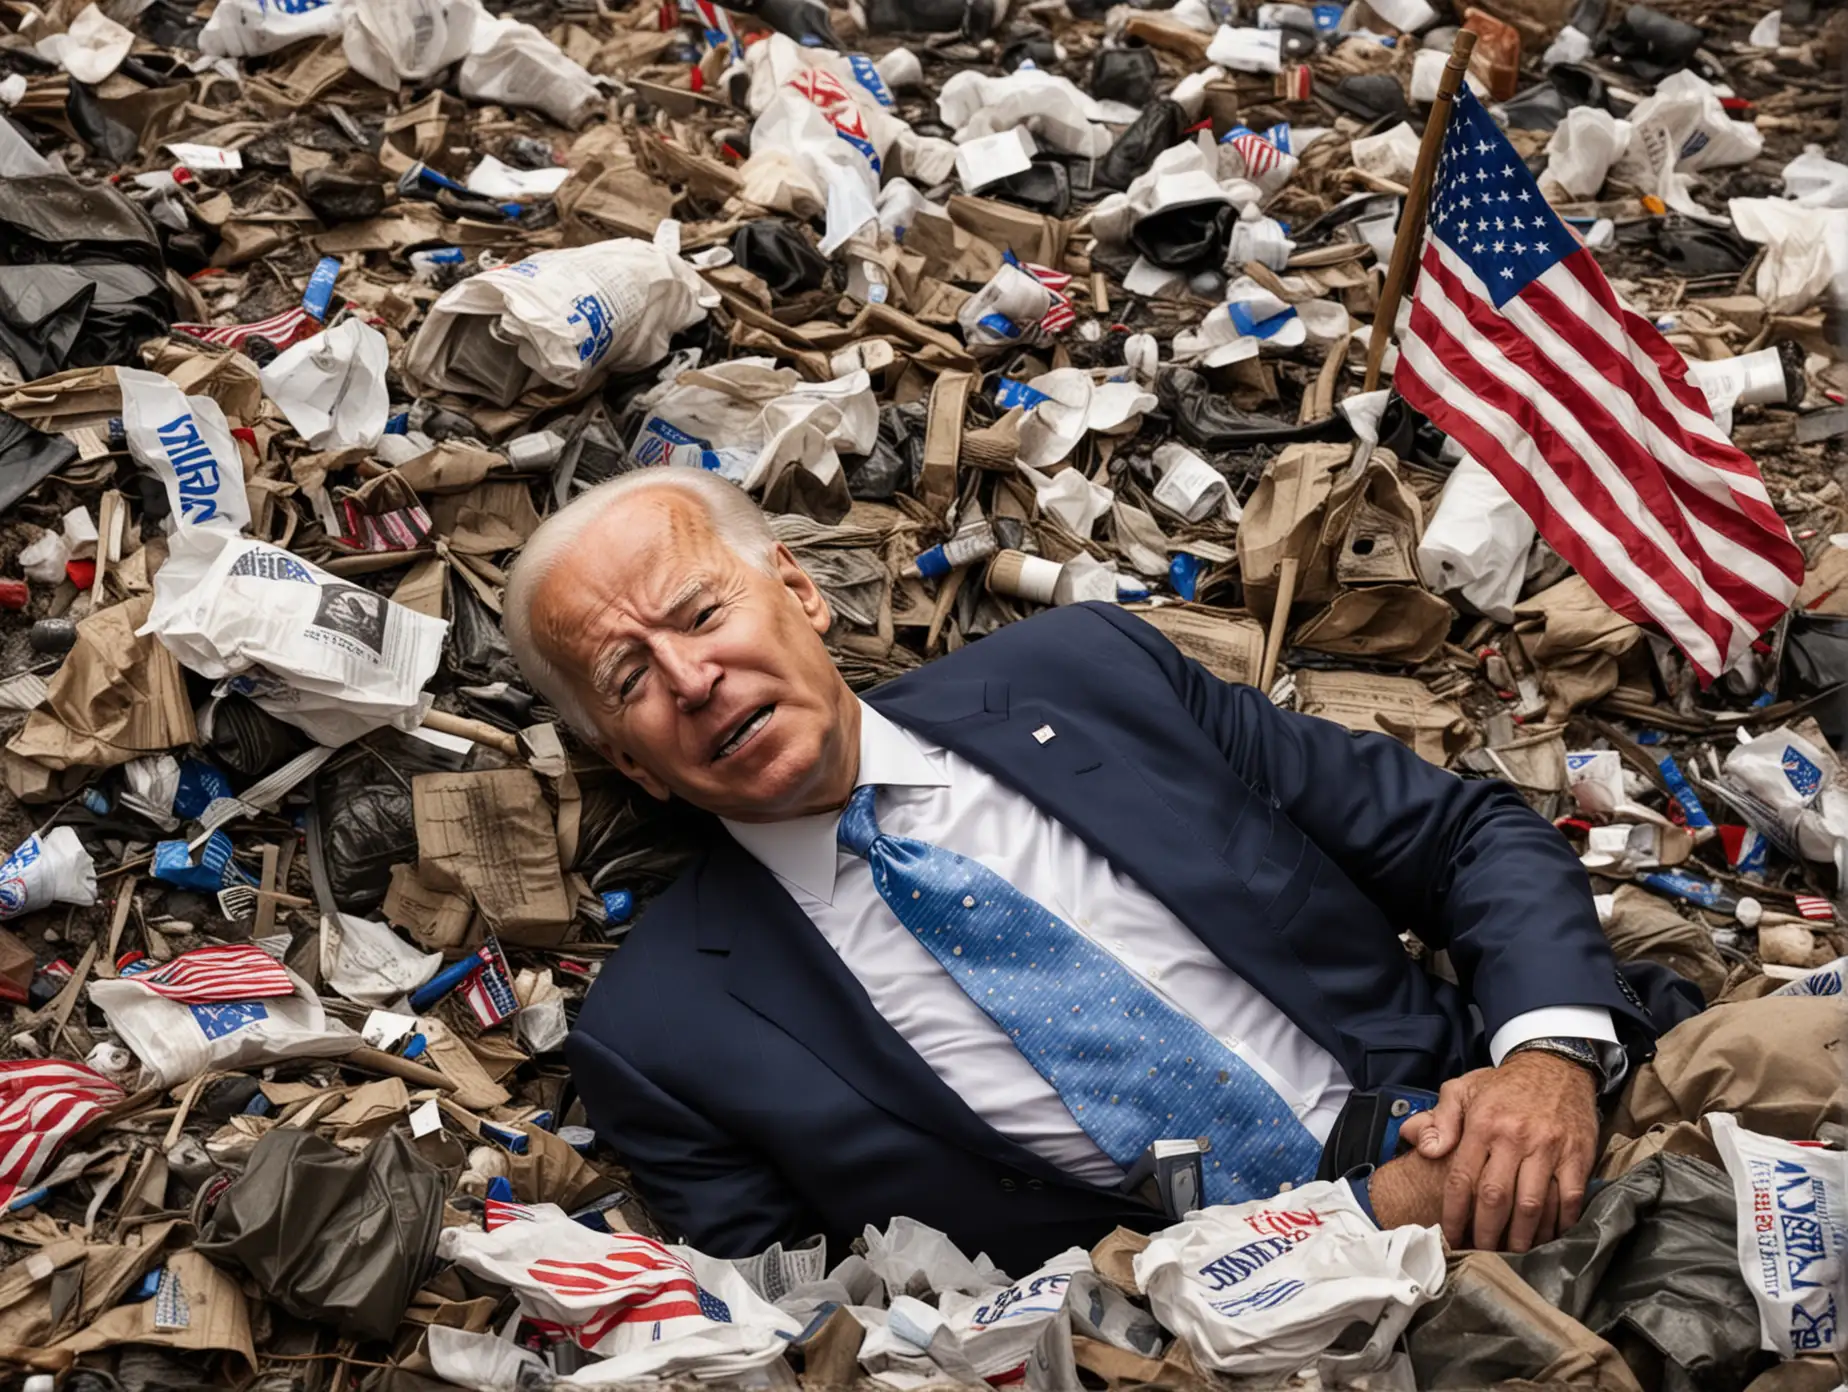 Joe-Biden-Crying-in-Pile-of-Garbage-with-American-Flag